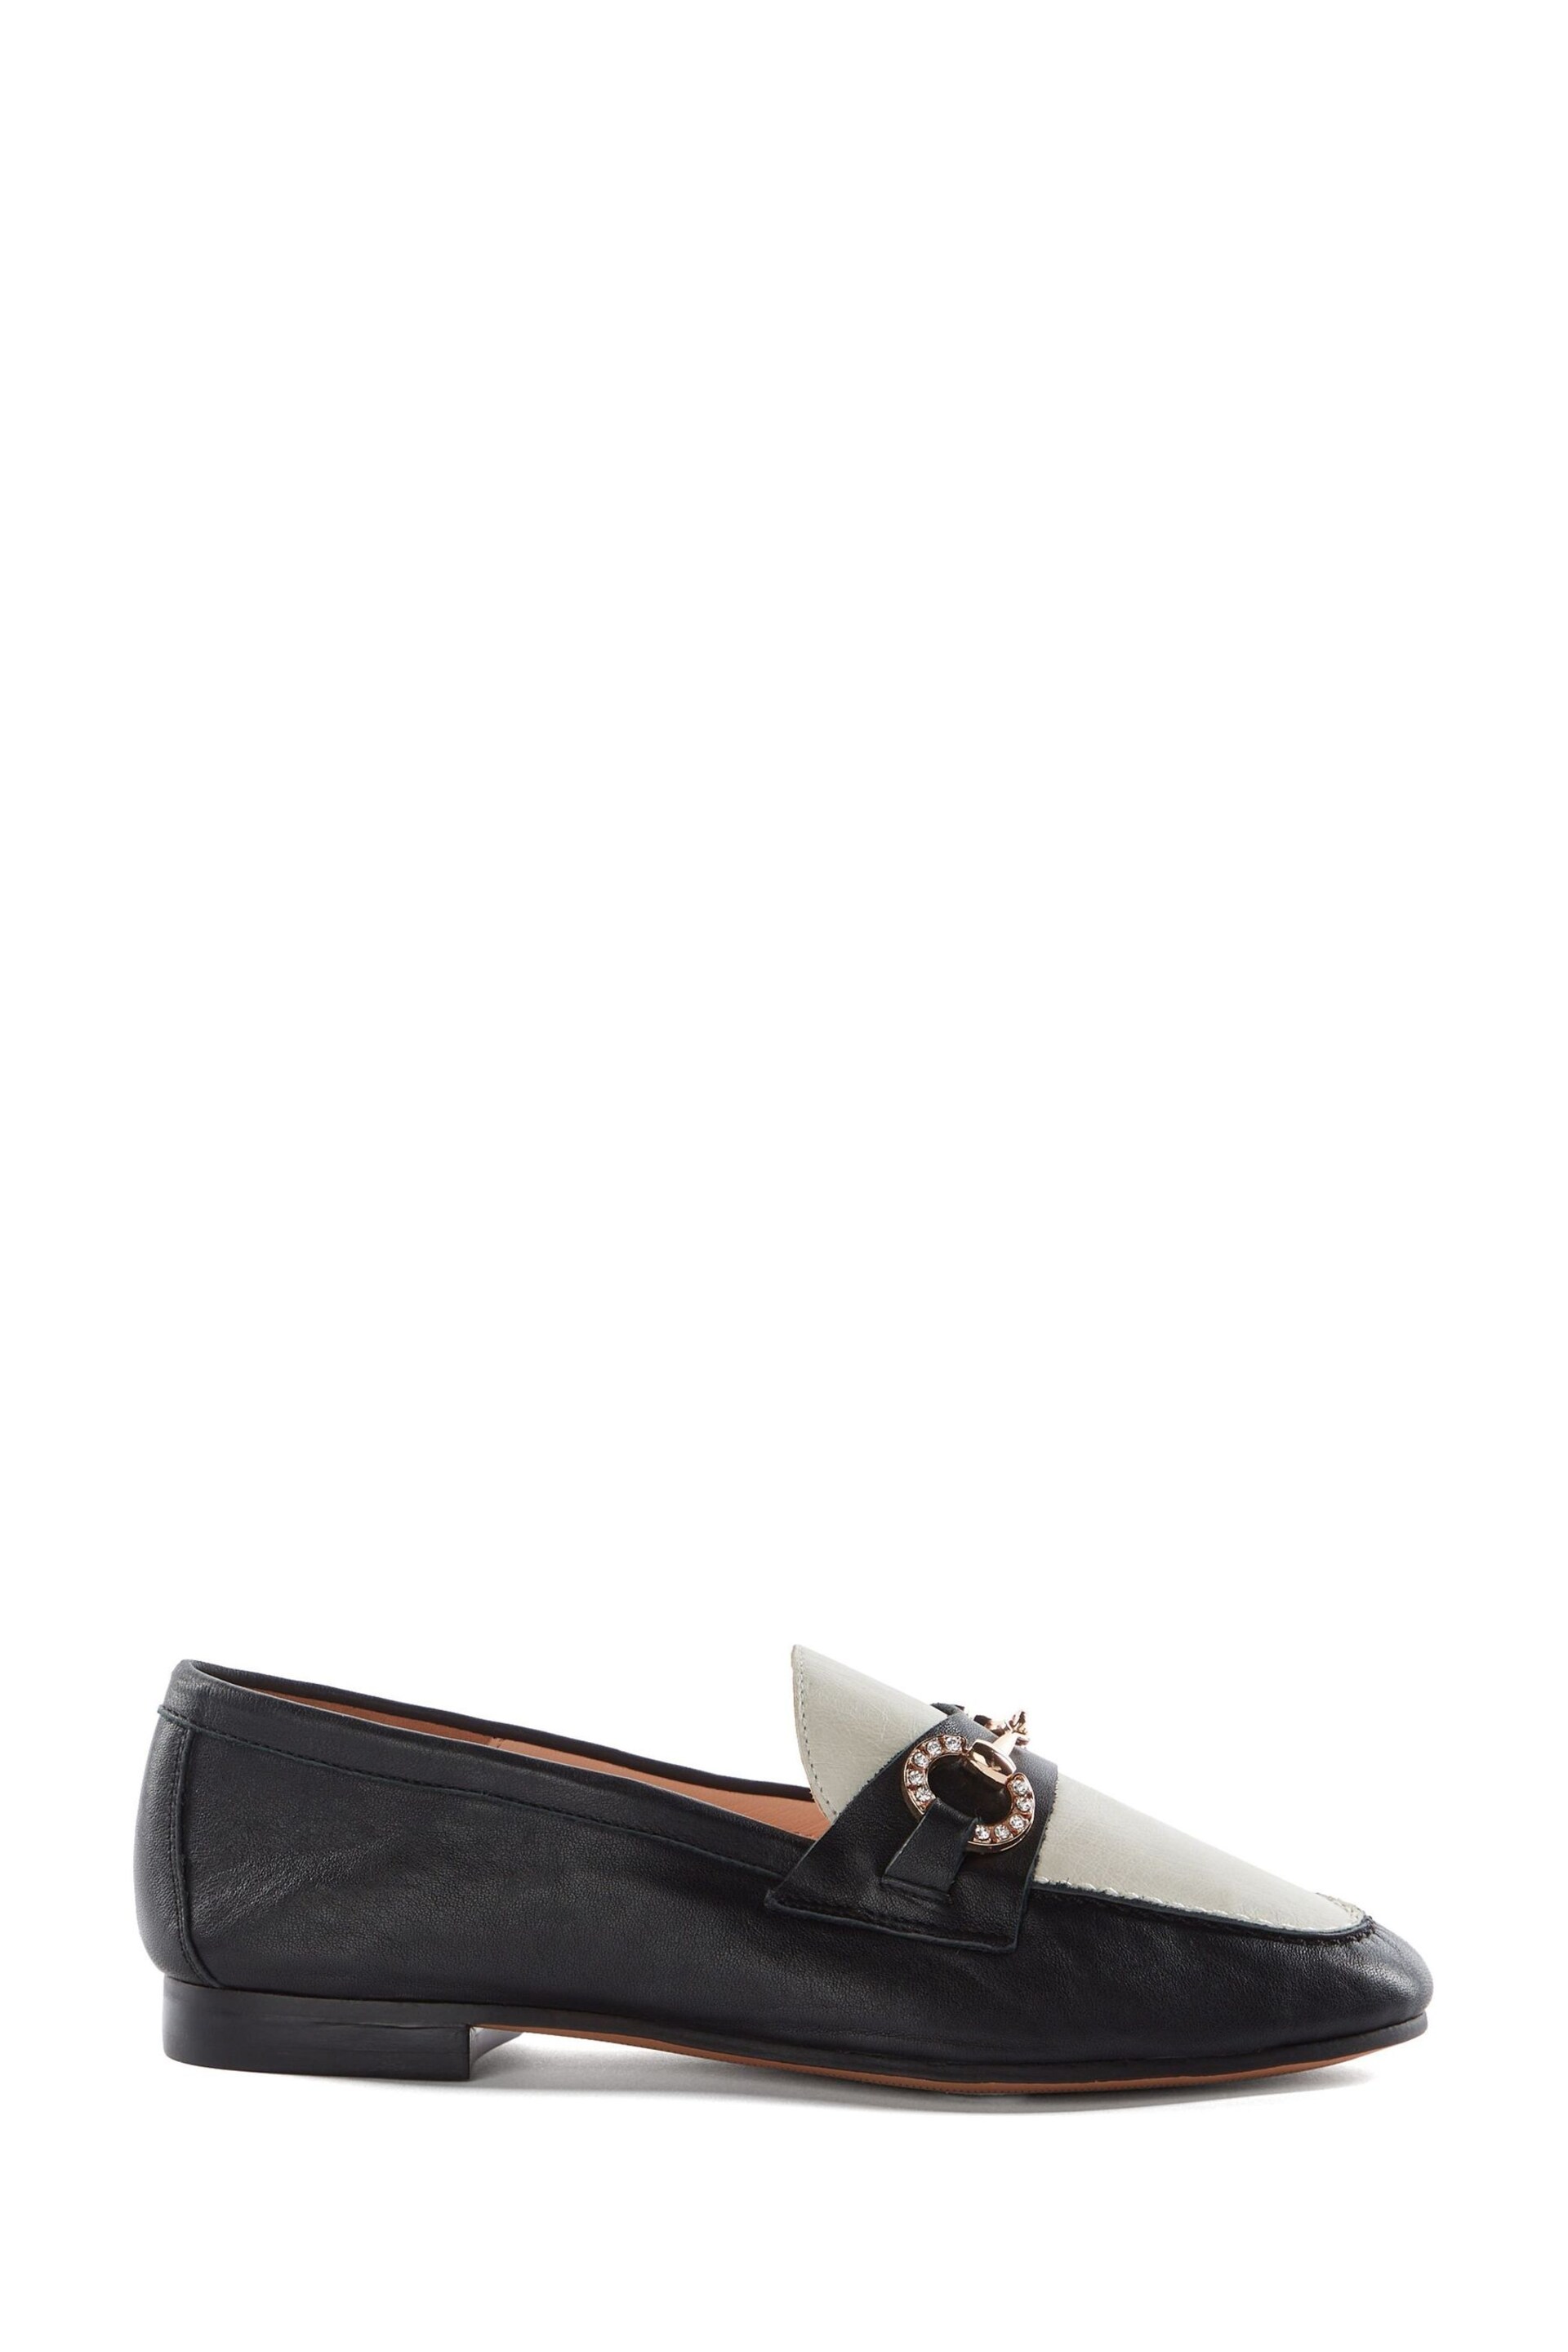 Dune London Black Gemstone Gem Snaffle Flexible Loafers - Image 3 of 5